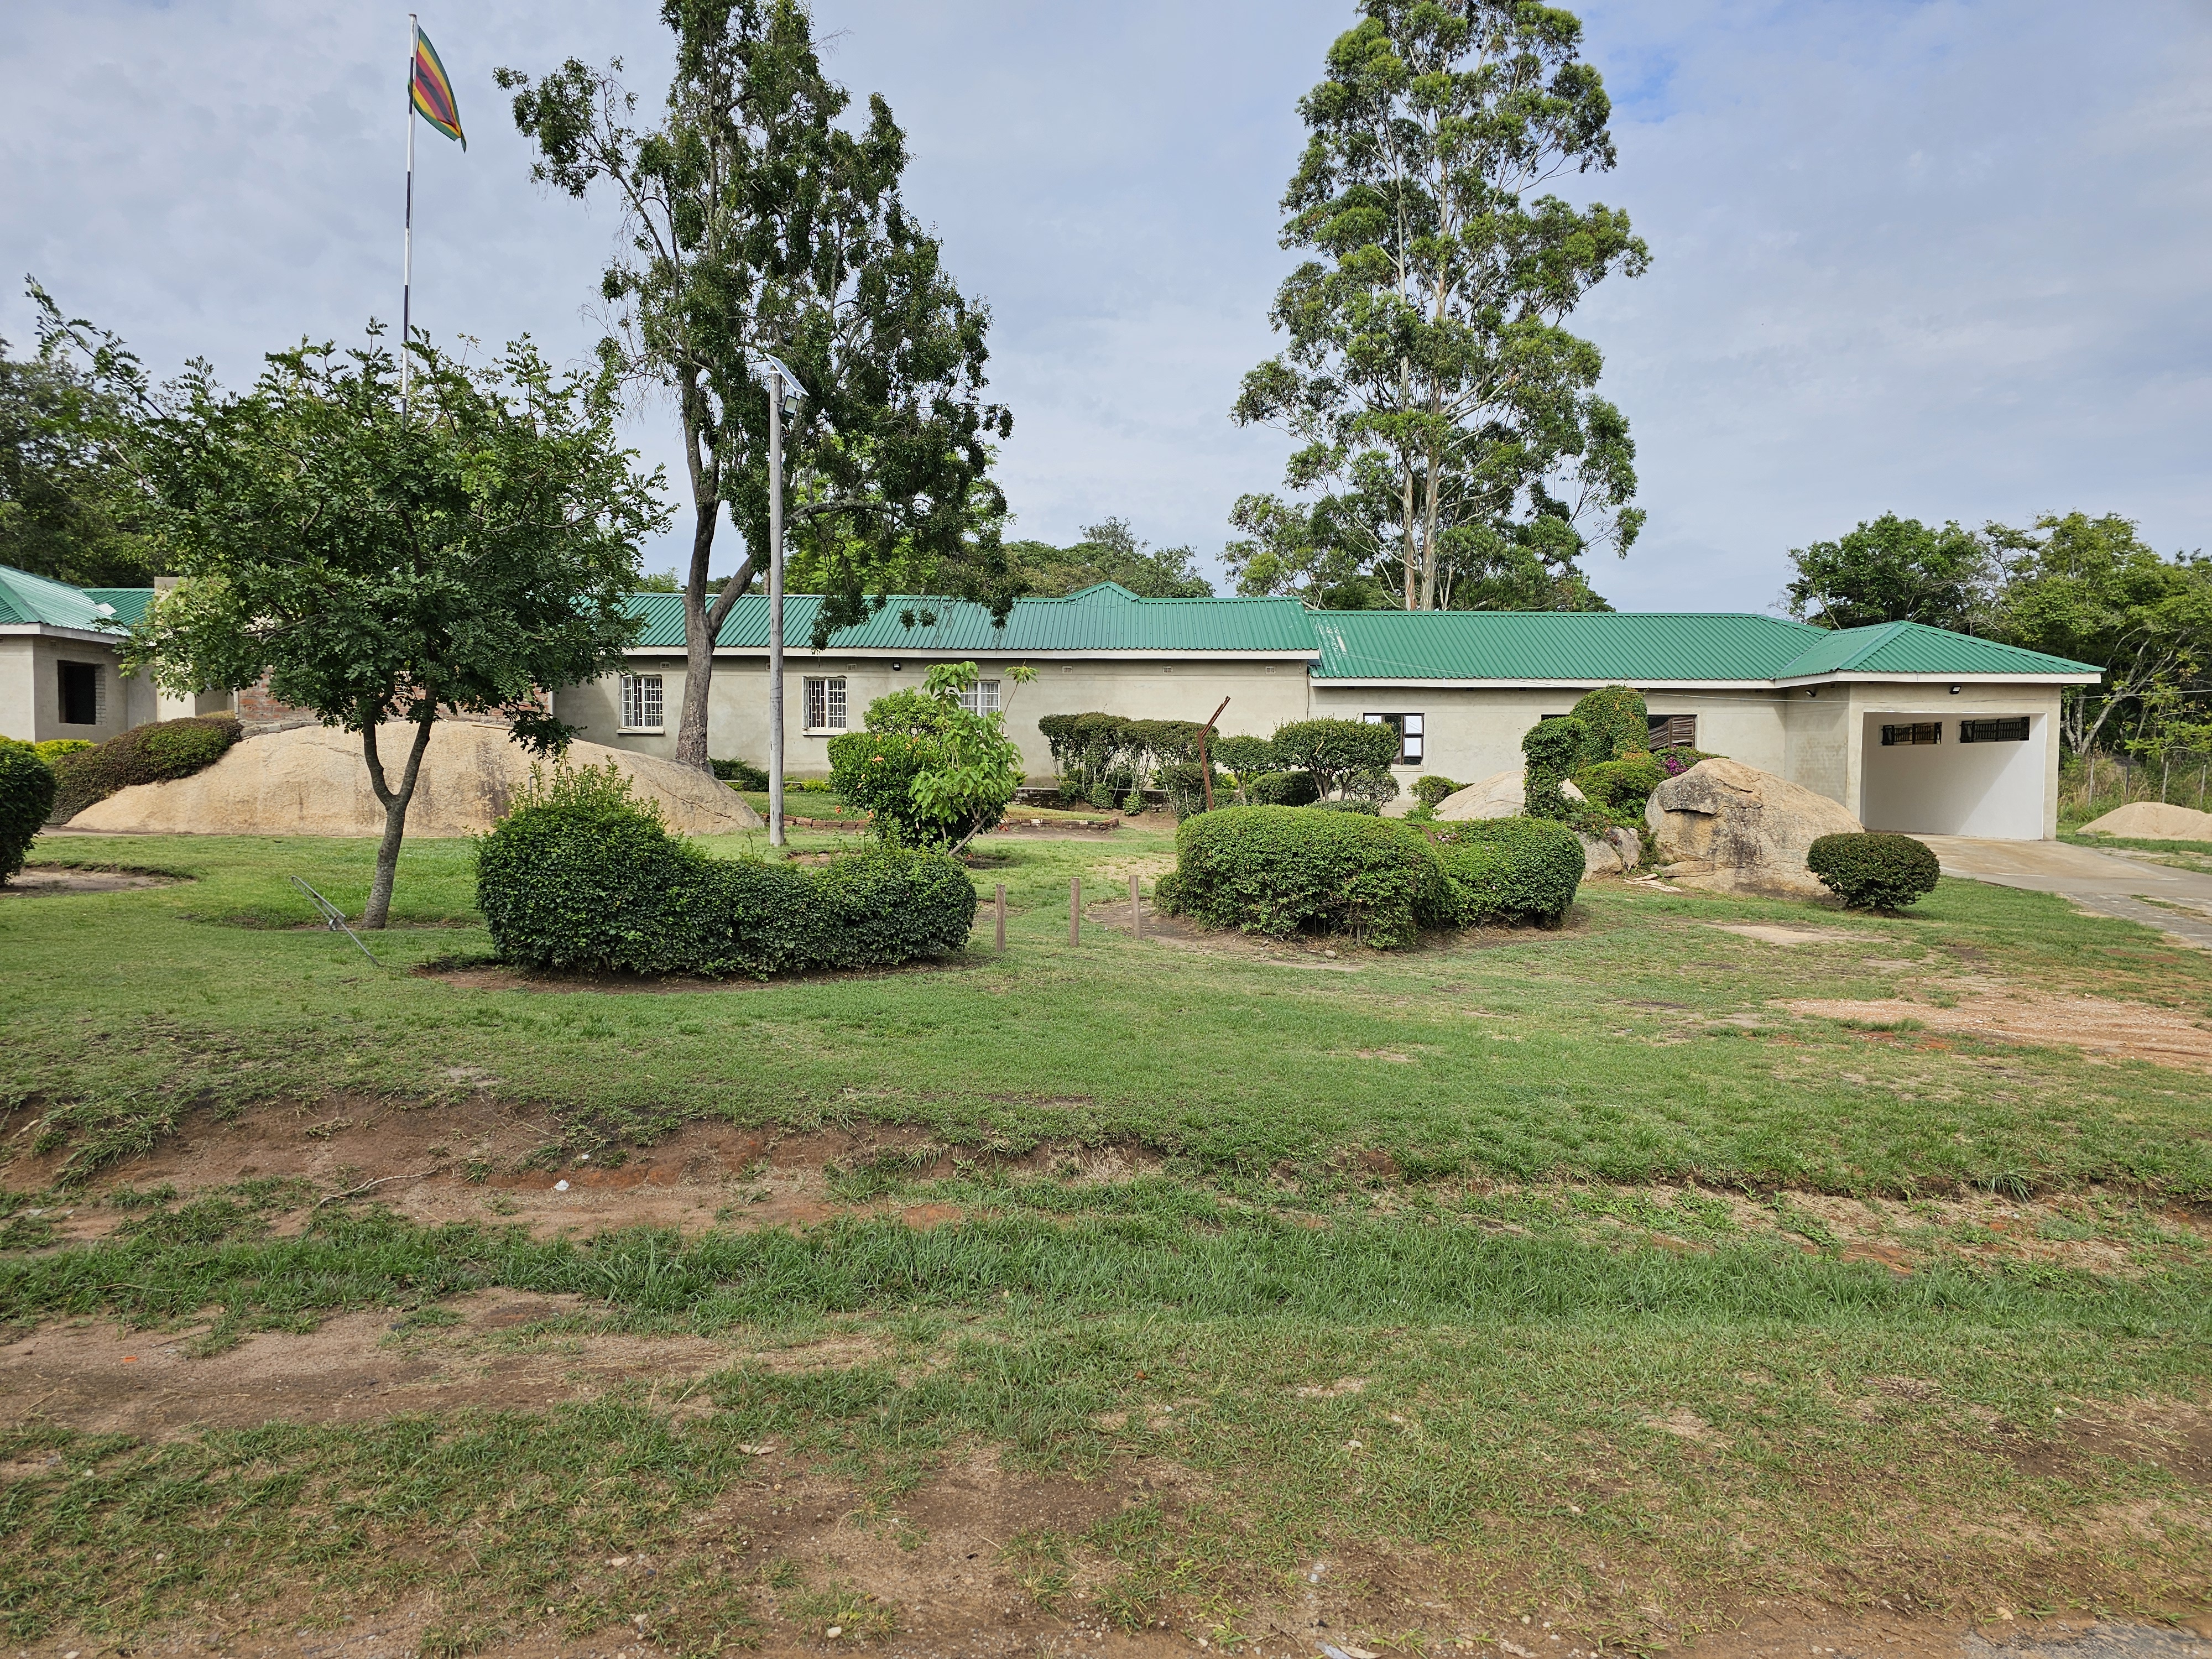 Mandoga Primary School